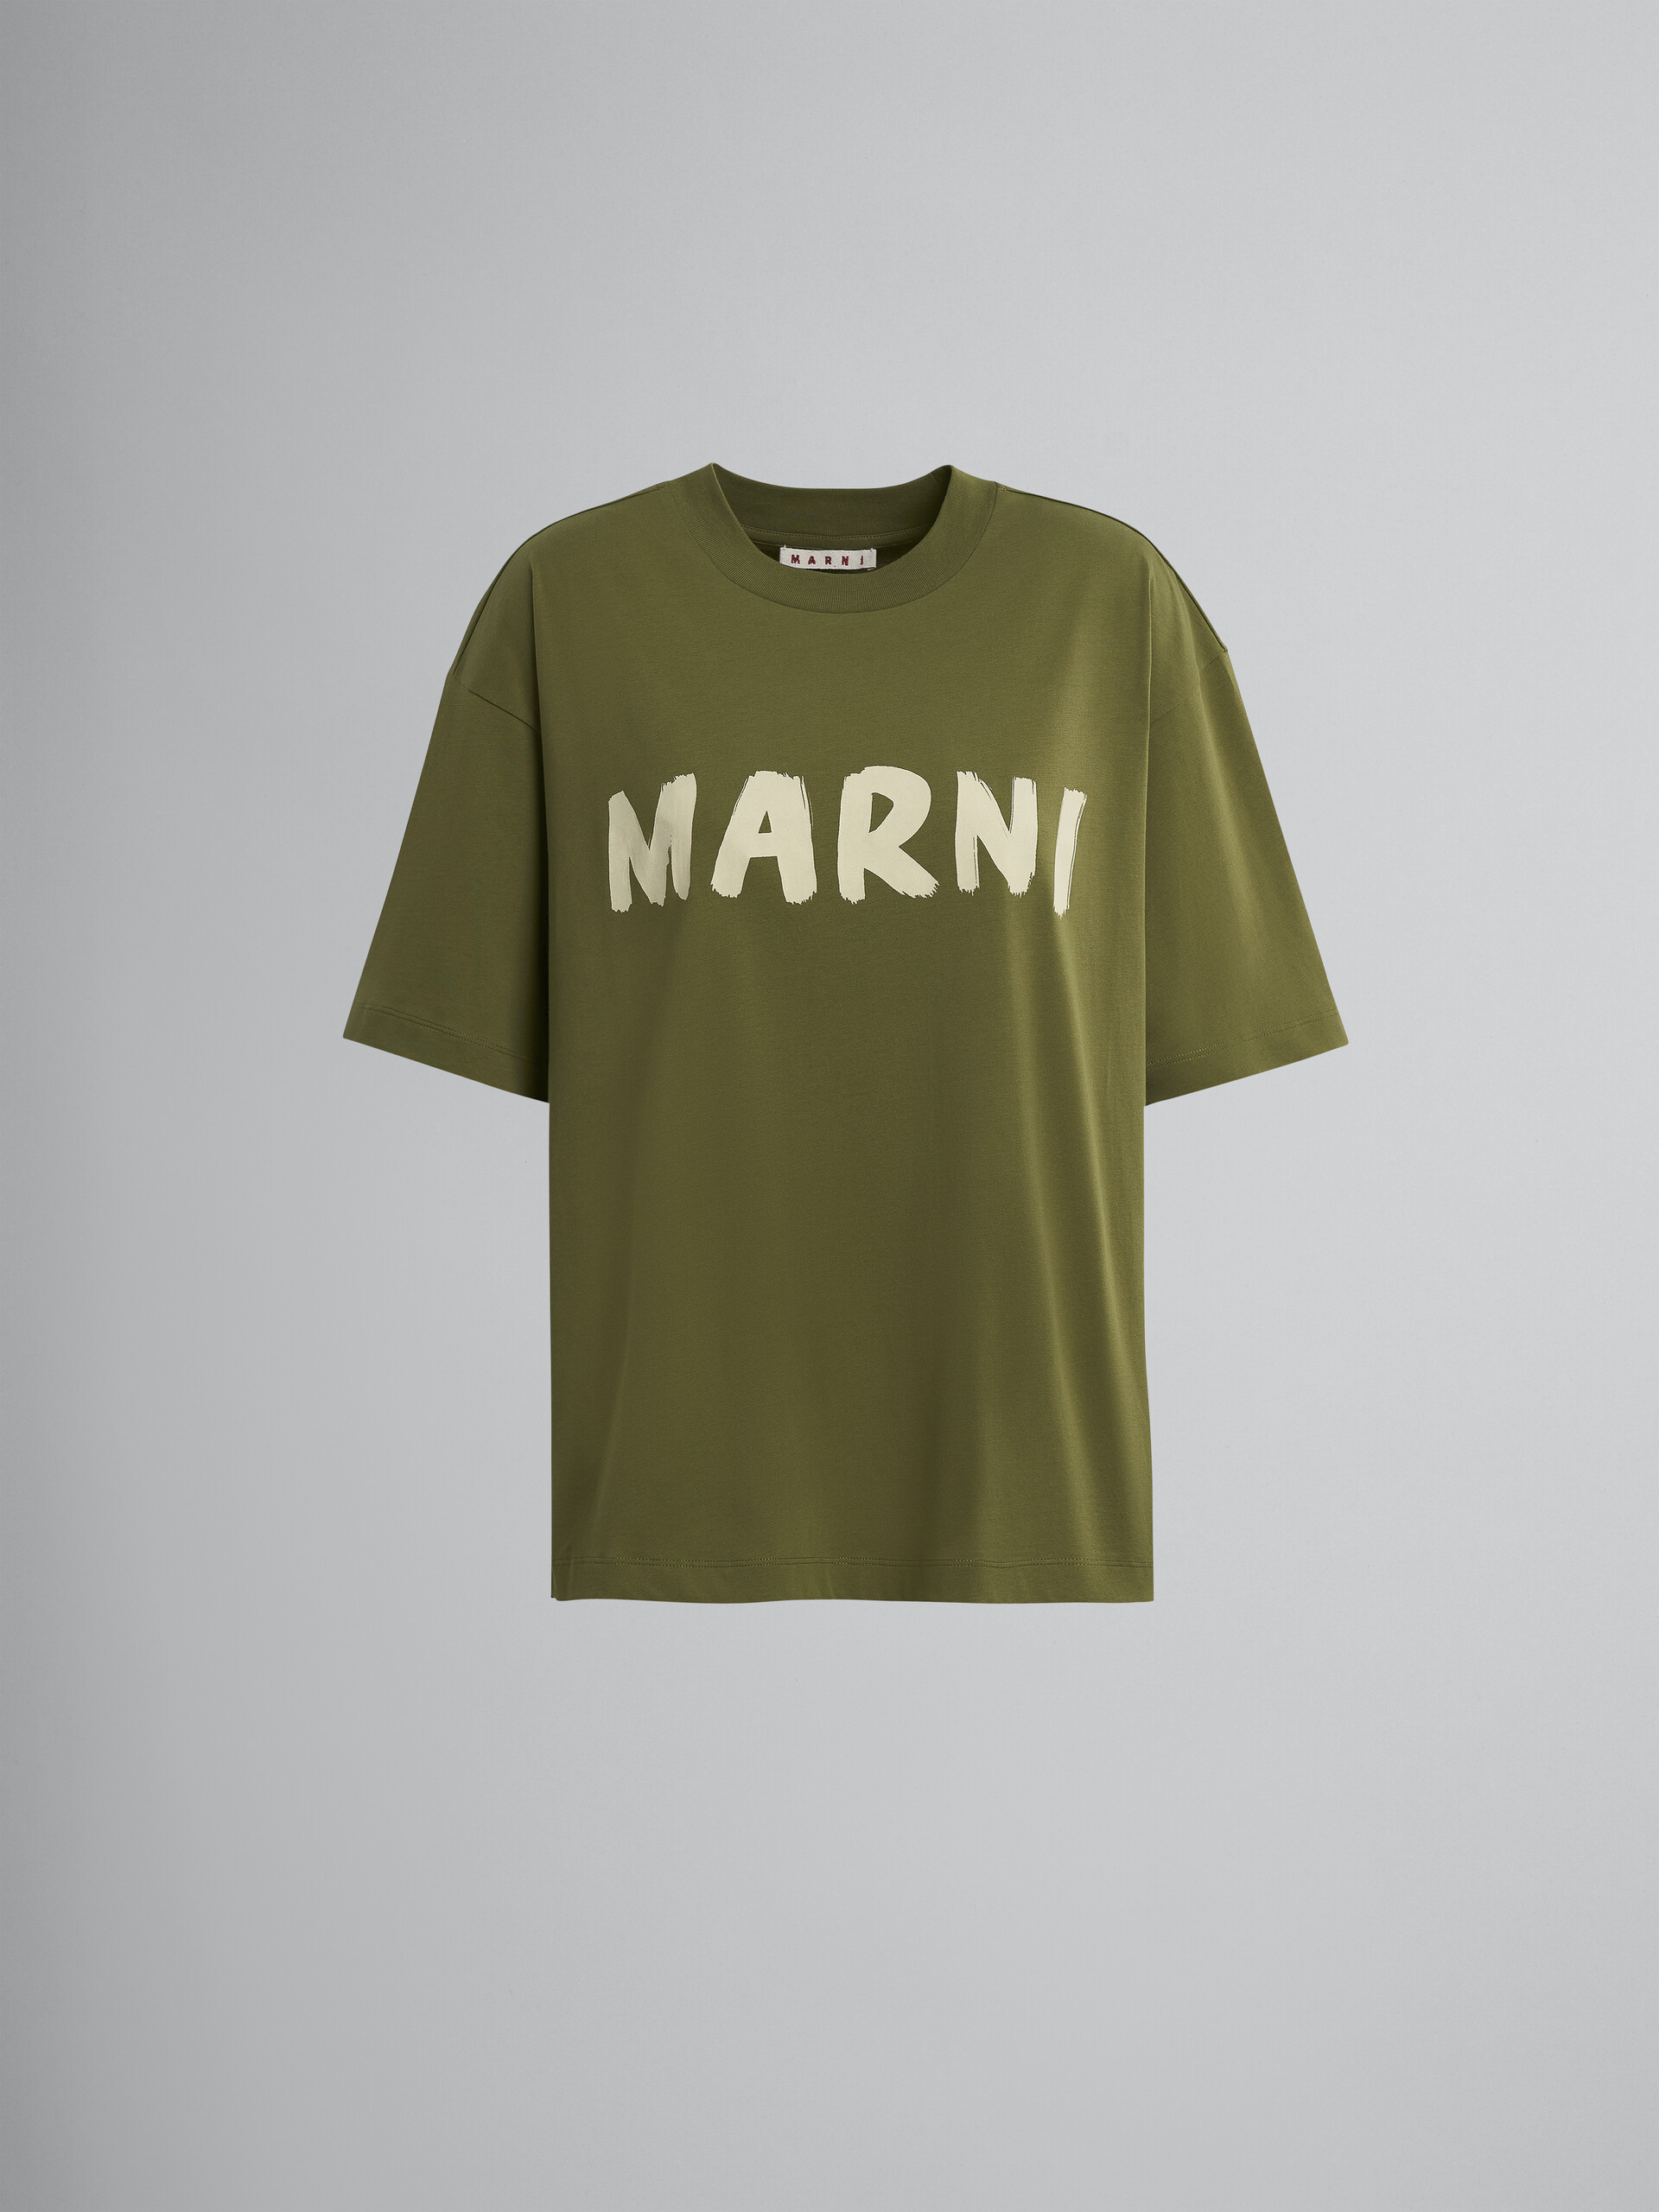 Grünes T-Shirt aus Bio-Jersey mit Logoprint - T-shirts - Image 1